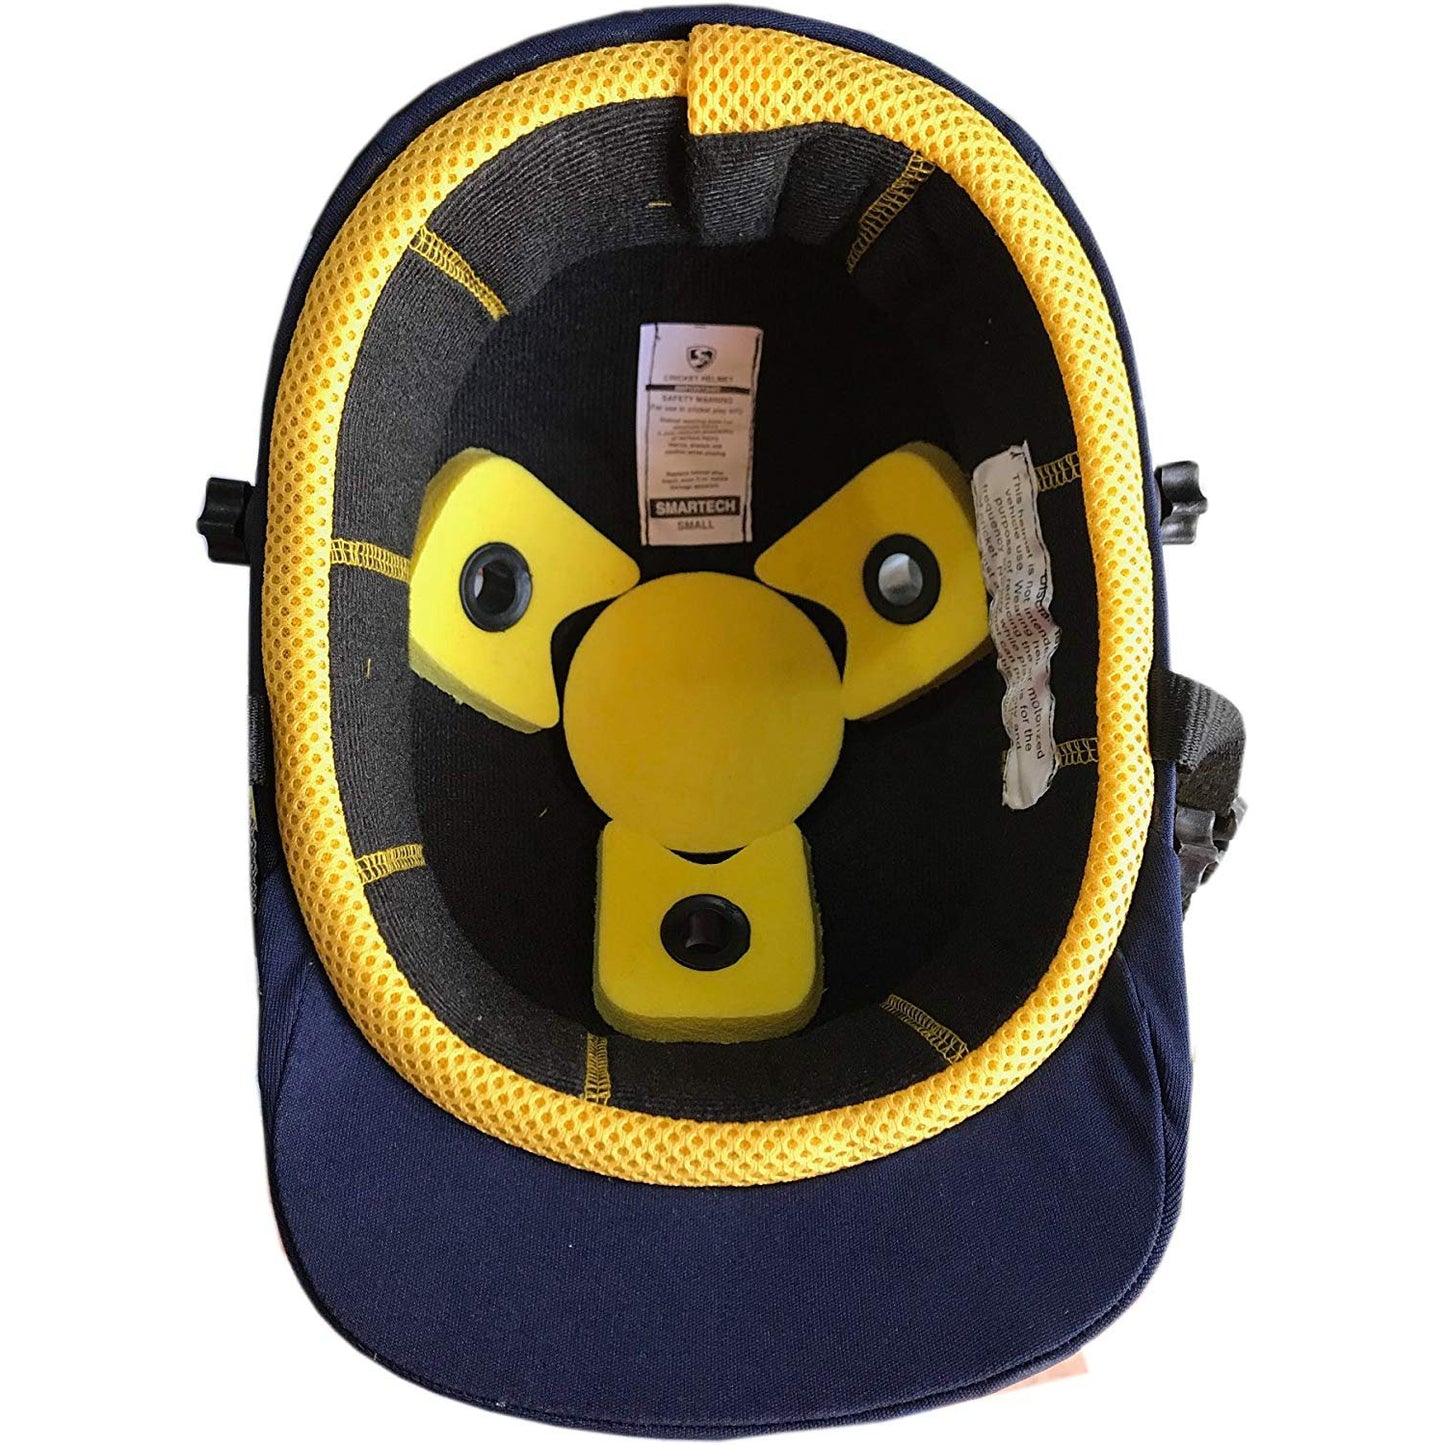 SG Smart Cricket Helmet - Best Price online Prokicksports.com